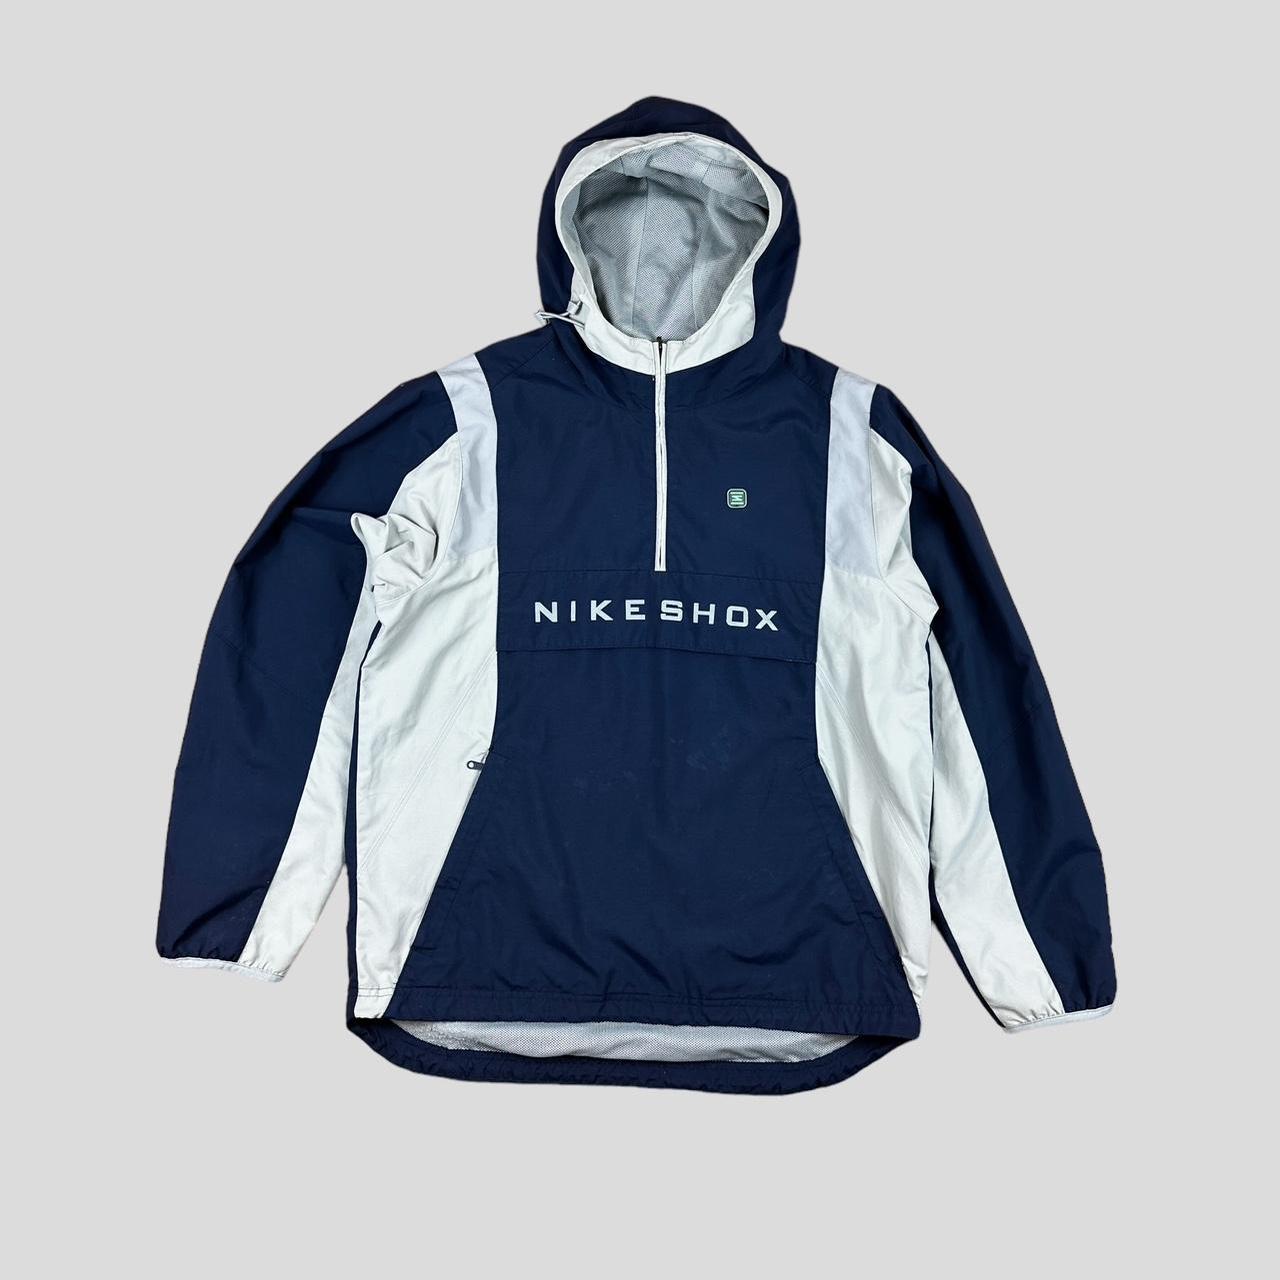 Nike shox blue and grey jacket